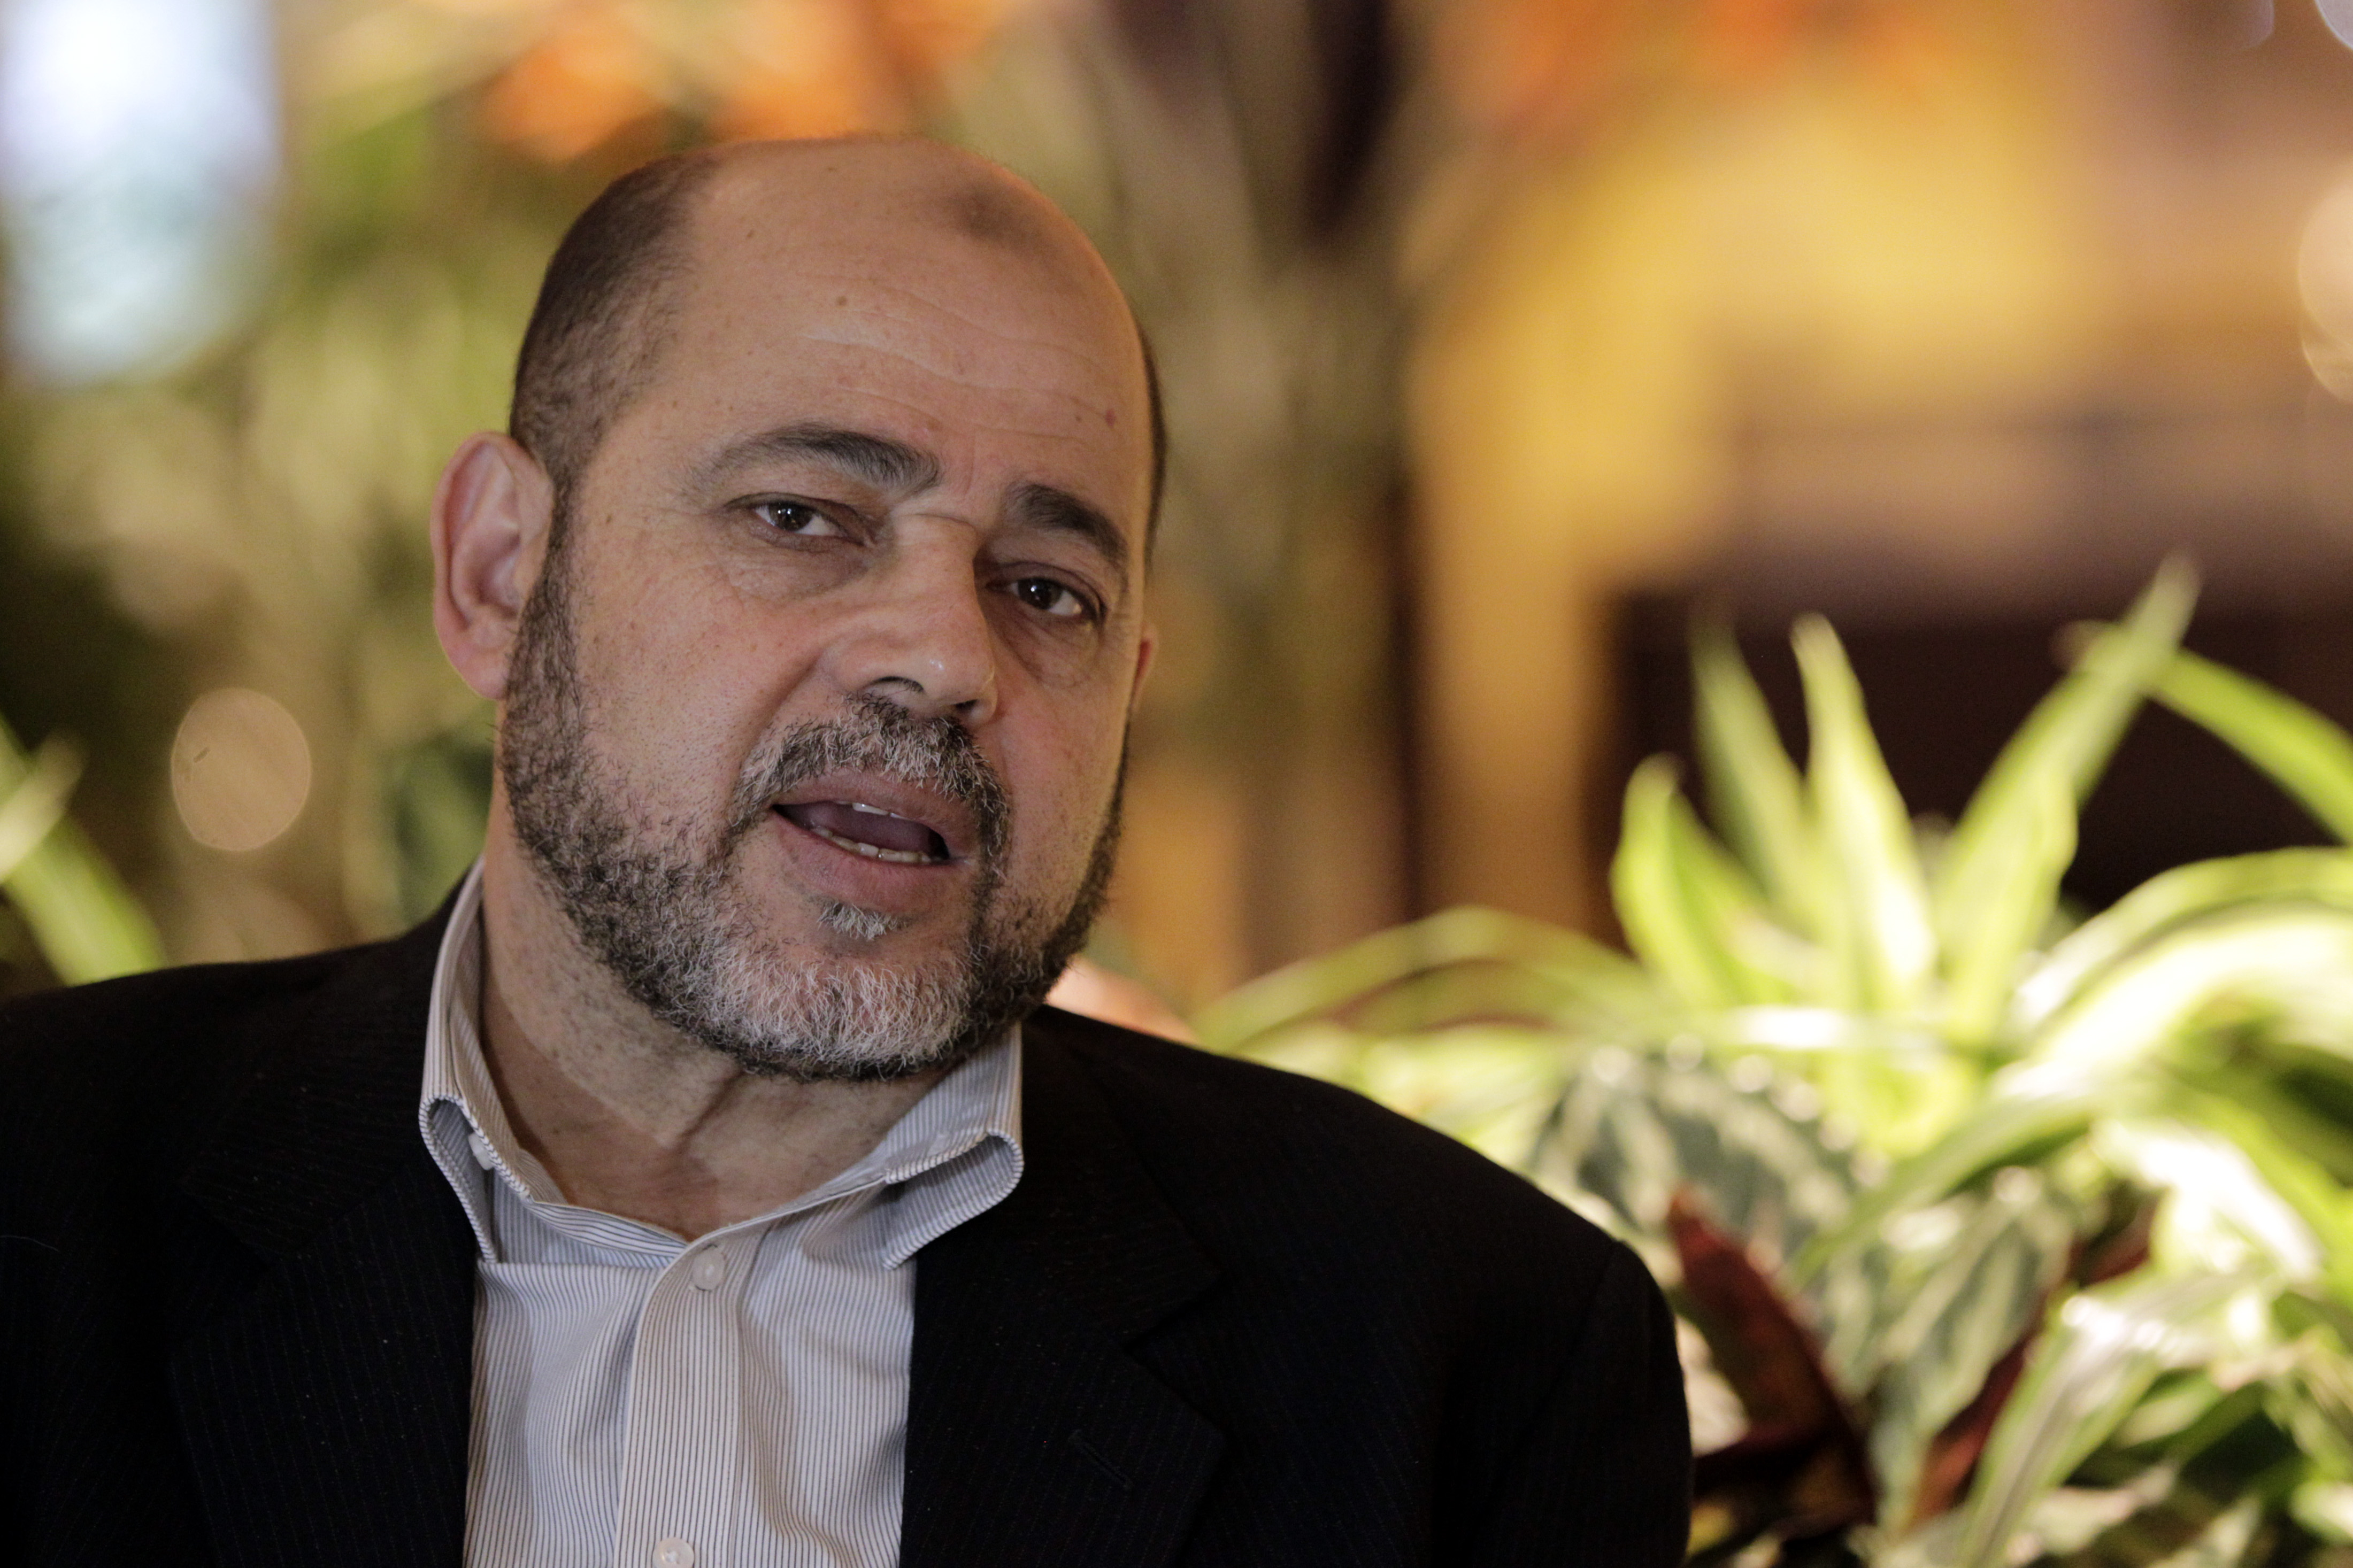 File: Hamas politburo member Musa Abu Marzouk speaks to a reporter at a hotel in Cairo, Egypt, 24 September 2014. EPA/KHALED ELFIQI